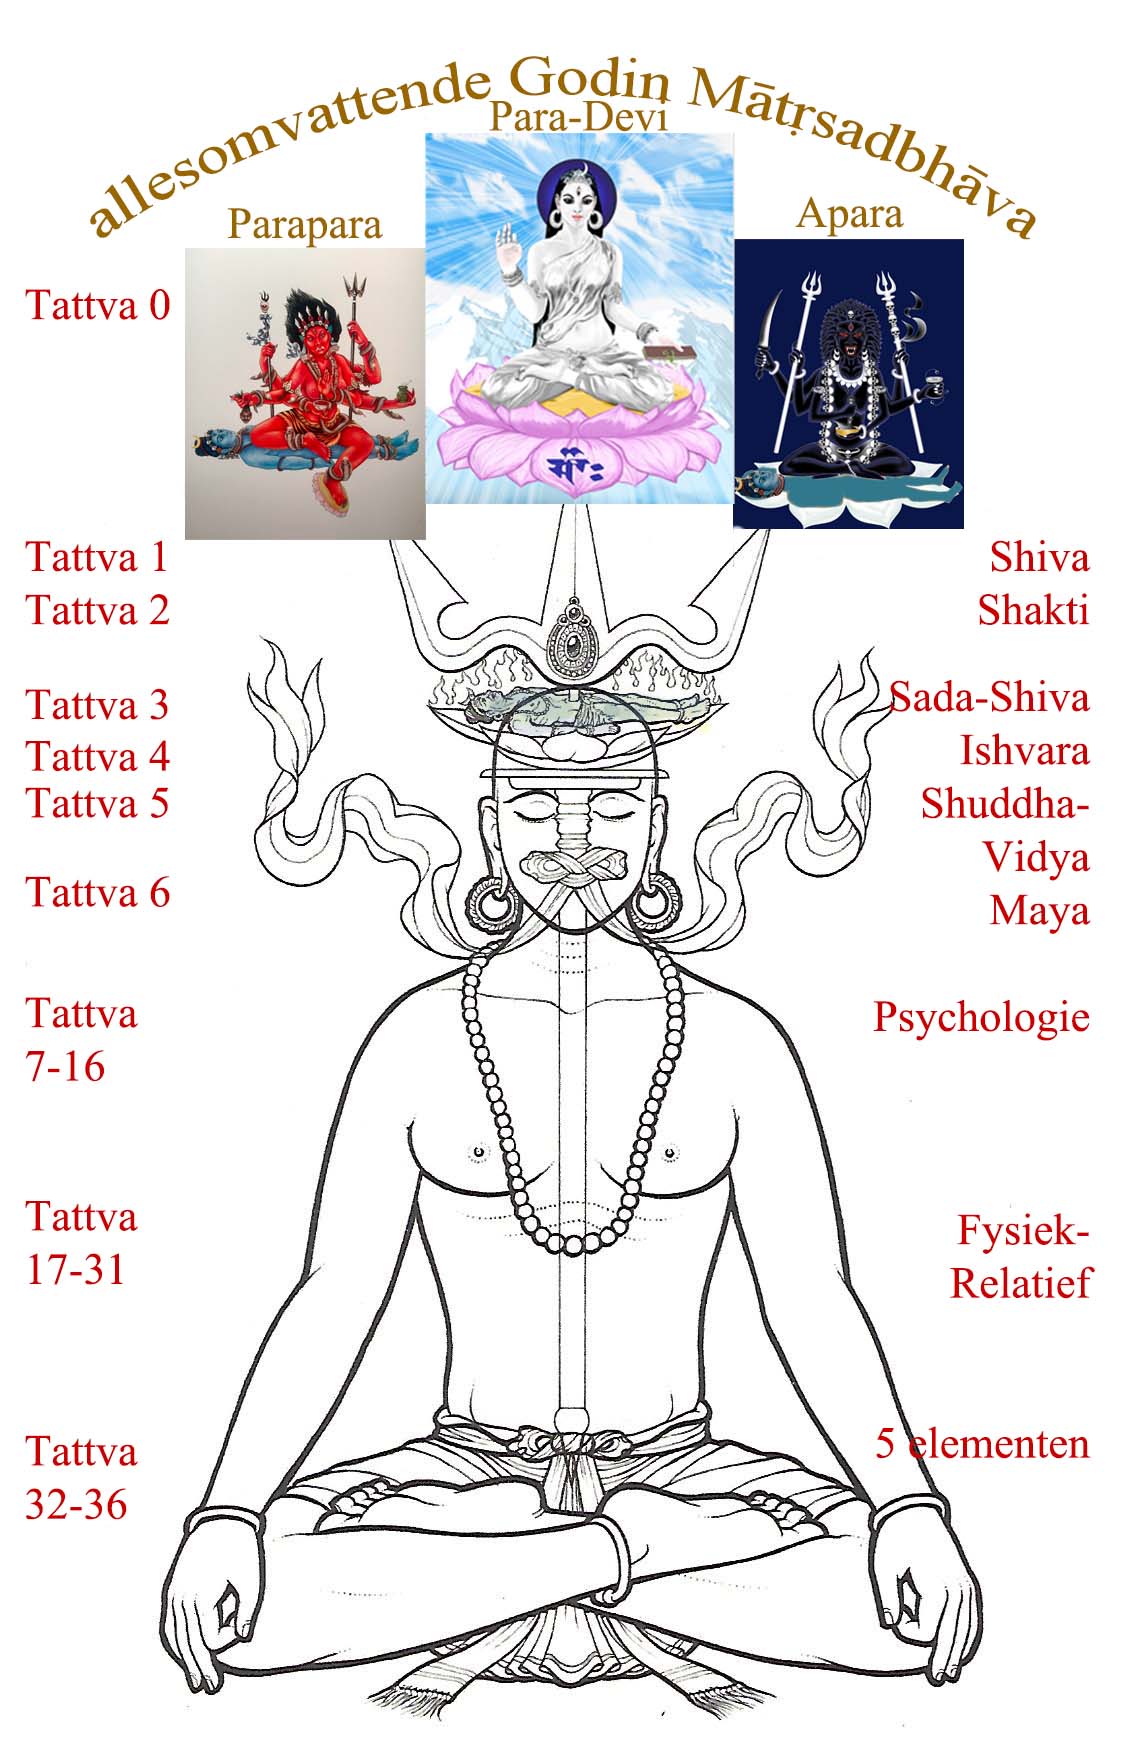 Godinnen Para-Devi, Parapara en Apara met onzichtbare allesomvattende Godin Matrsadbhava 